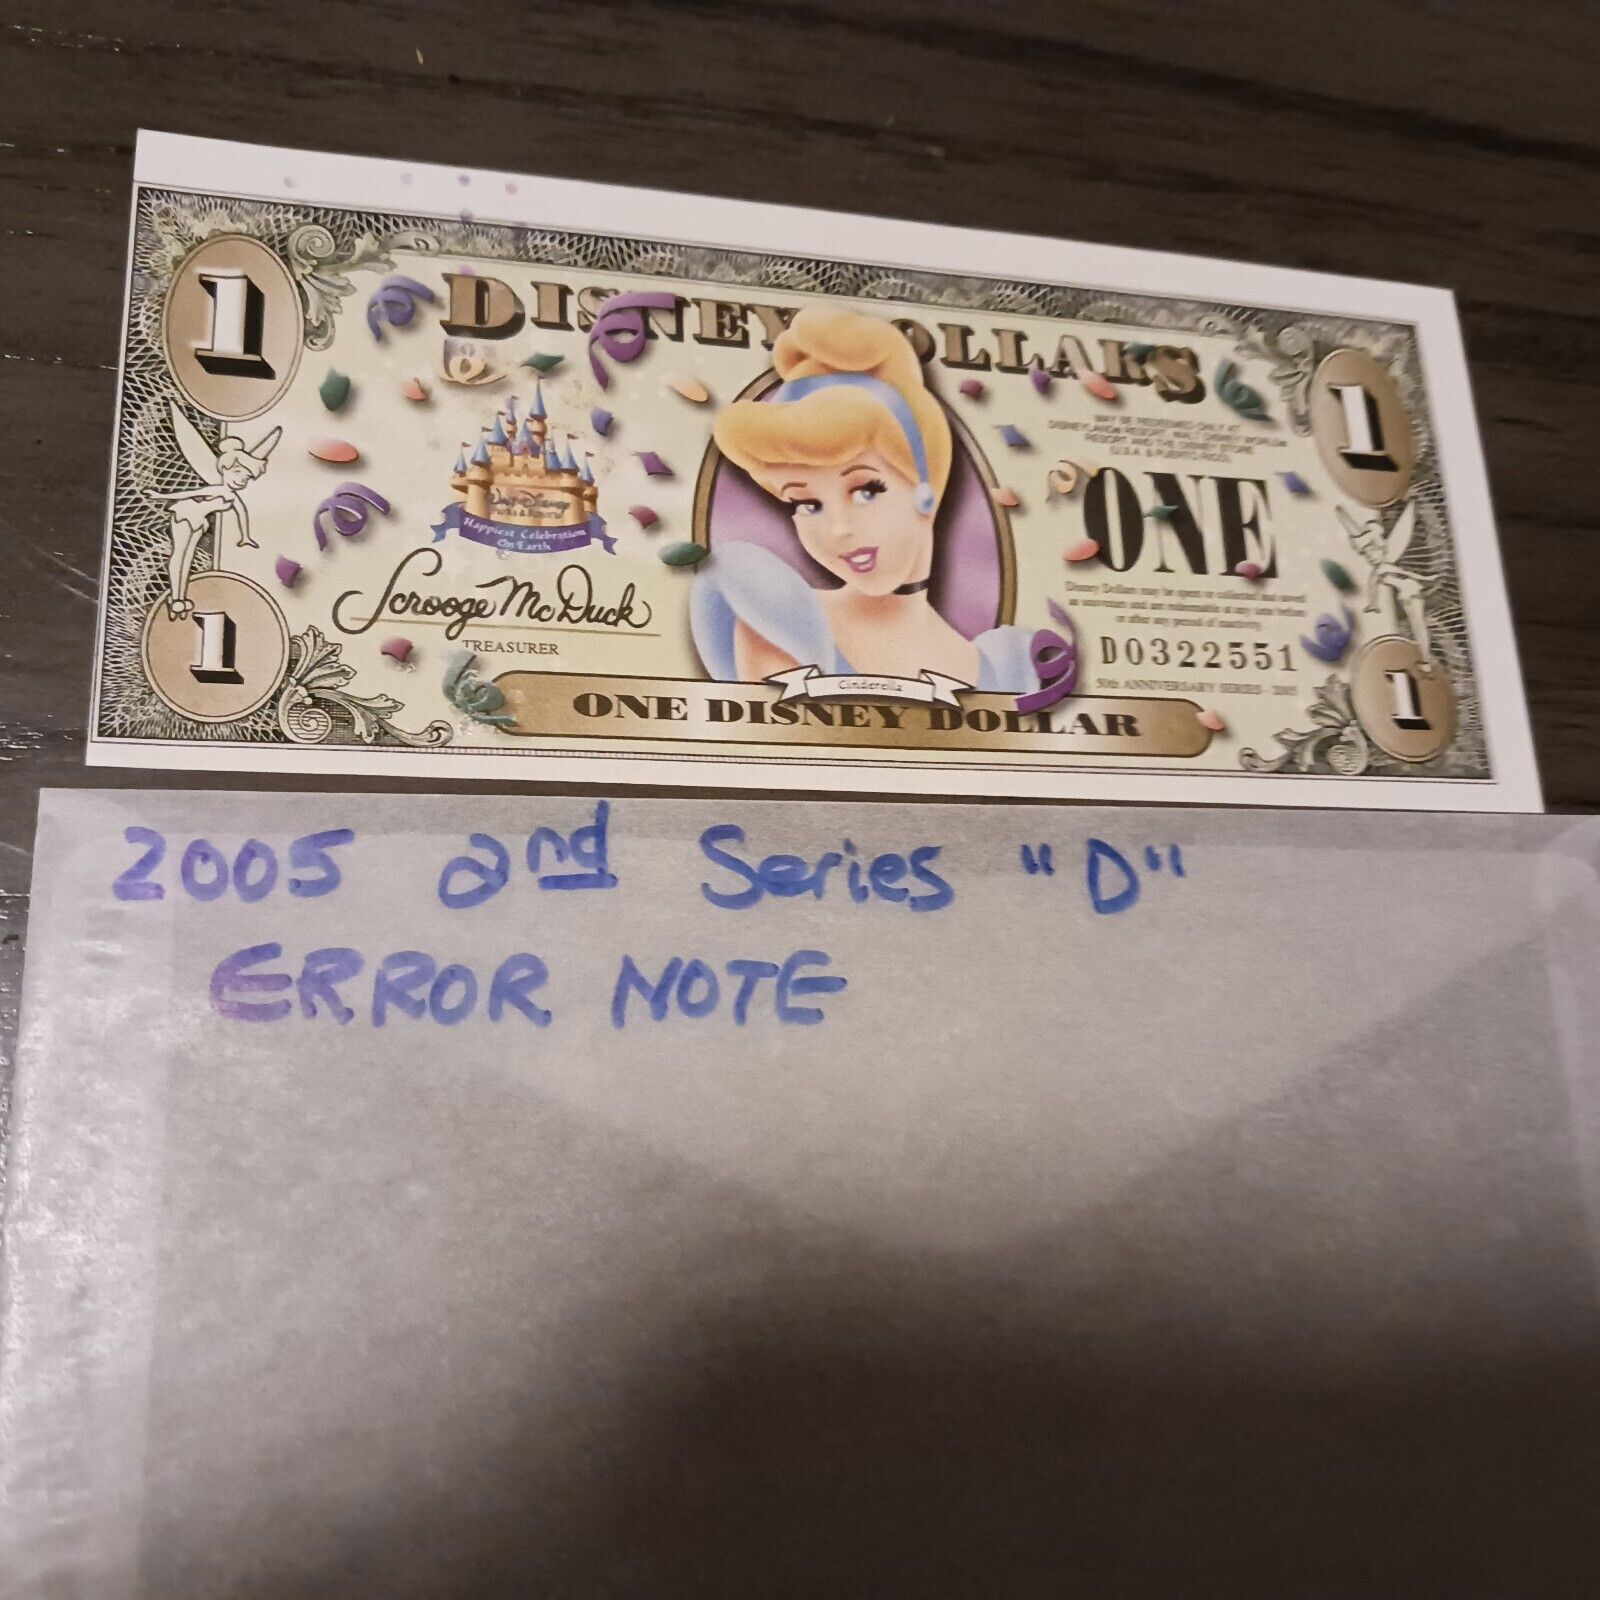 Disney Dollar 2005 Error Note.